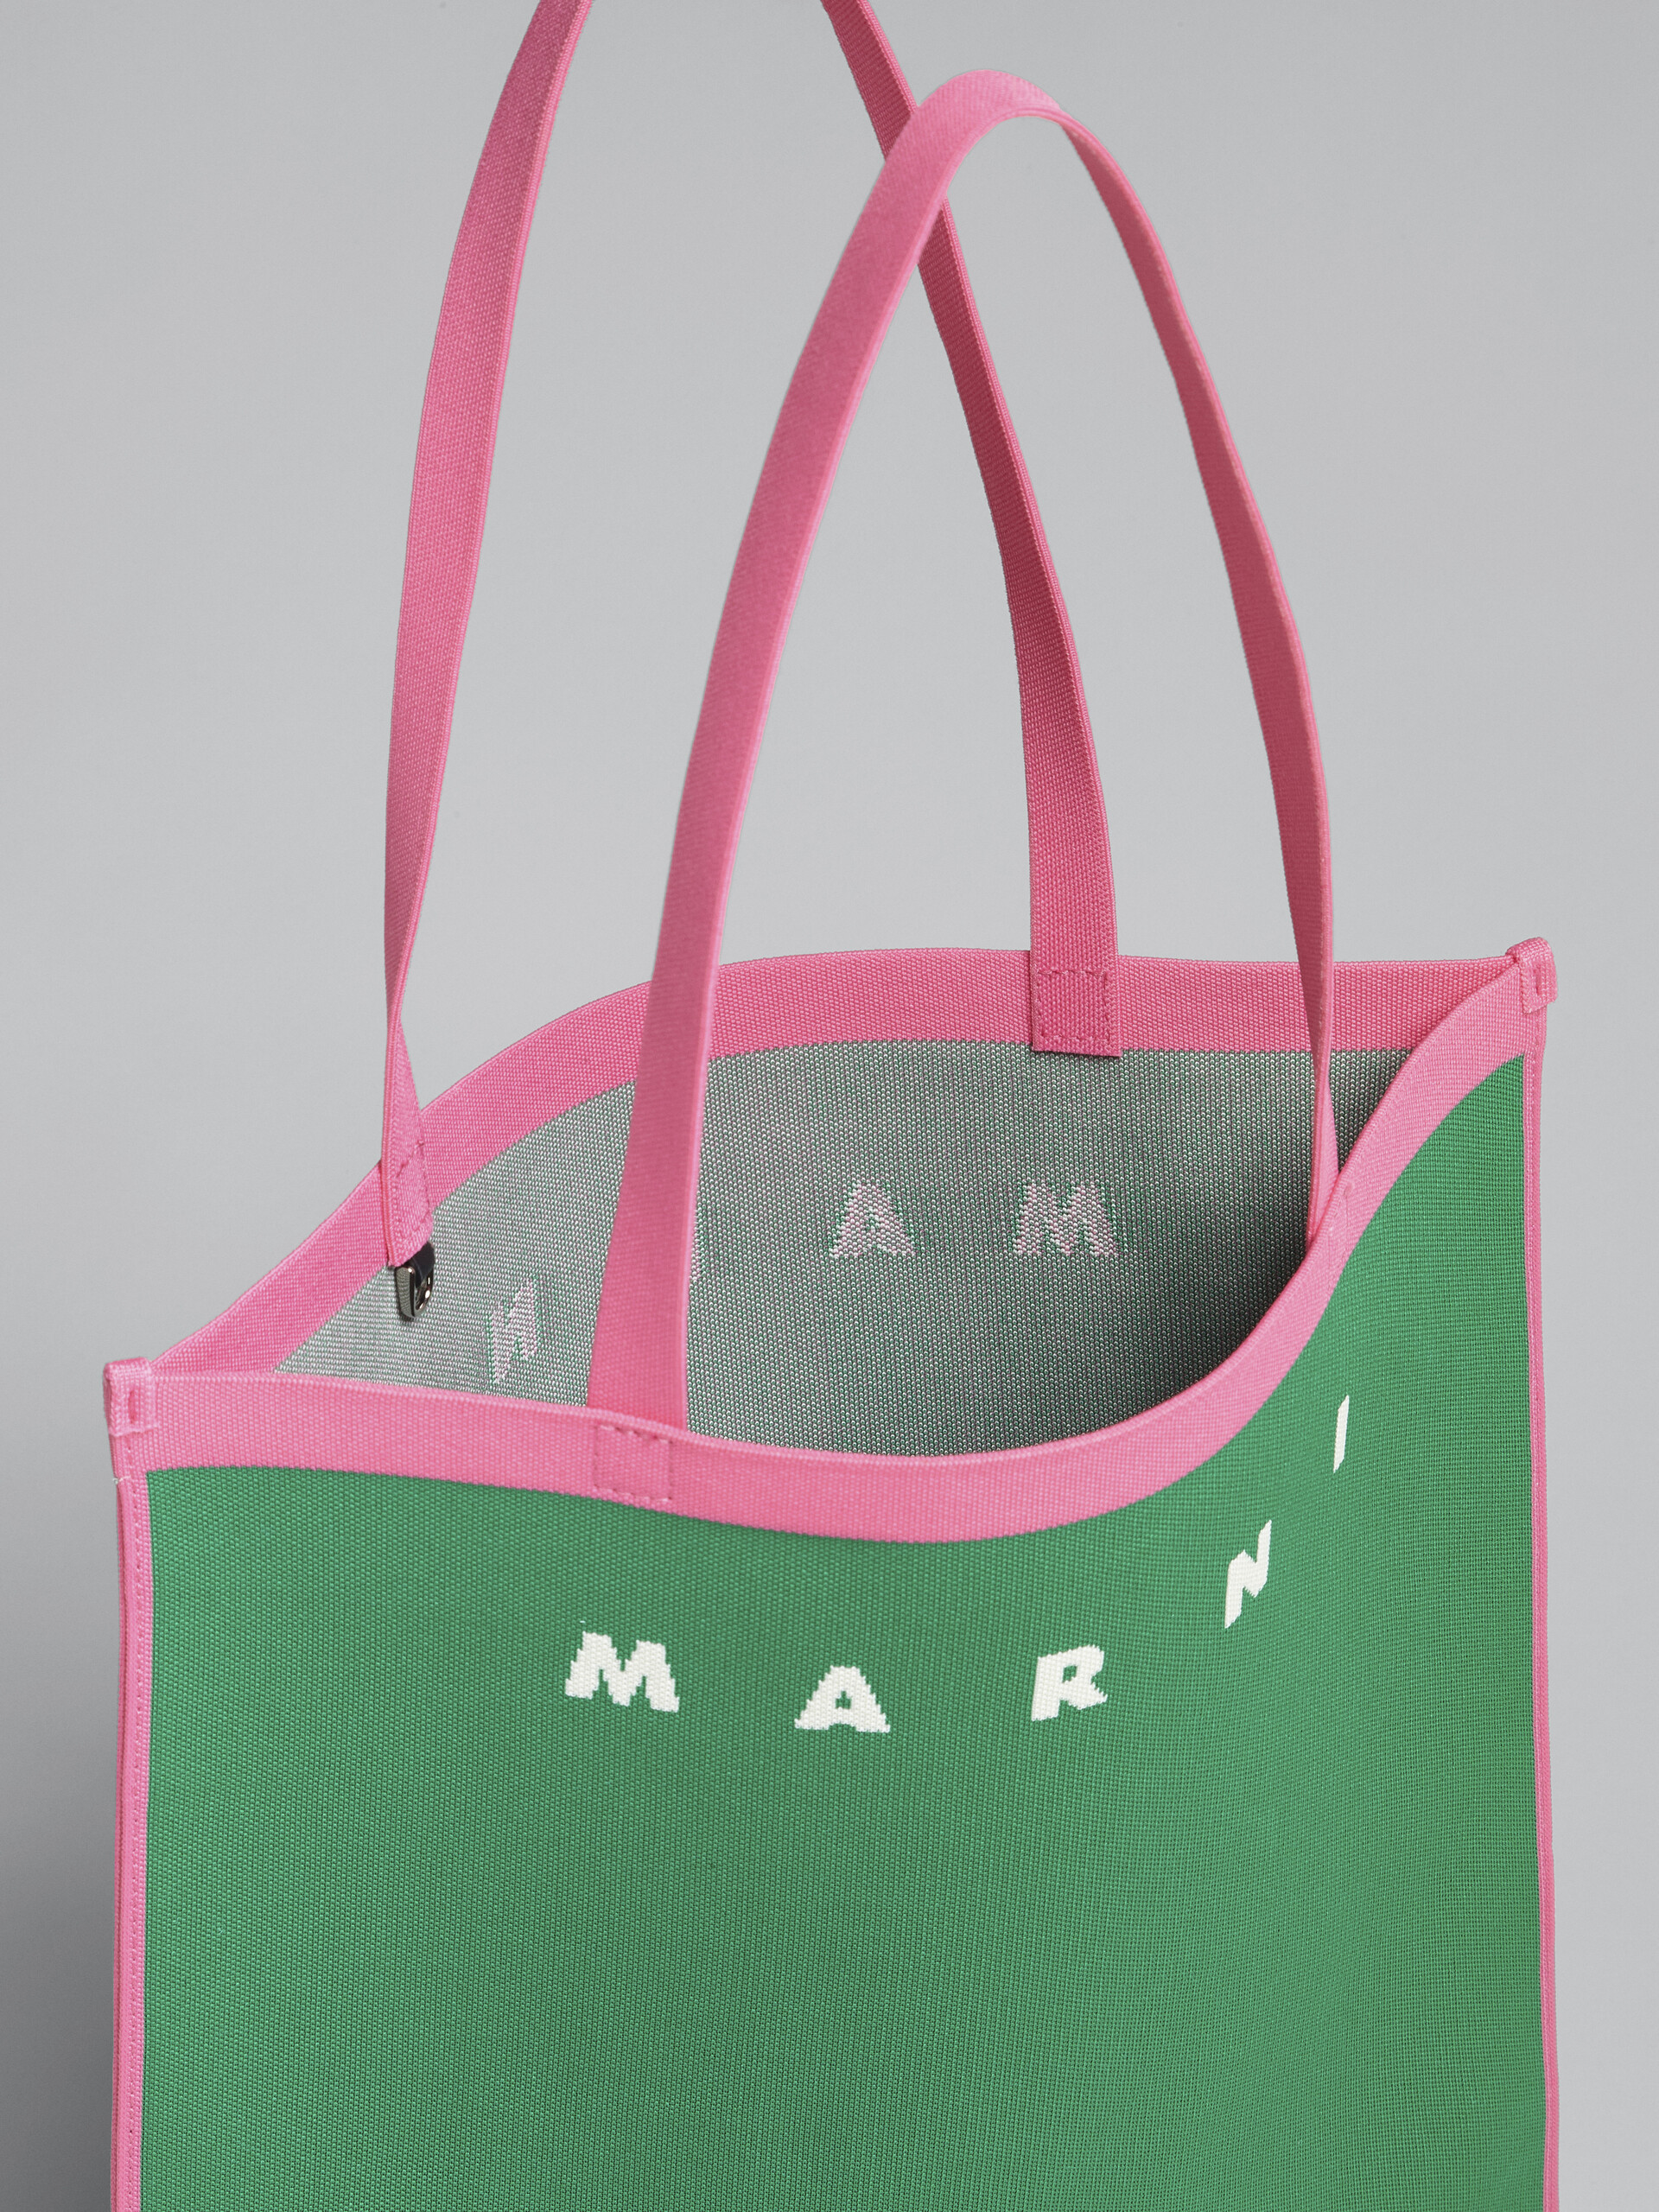 Green and fuchsia jacquard bag - Shopping Bags - Image 4